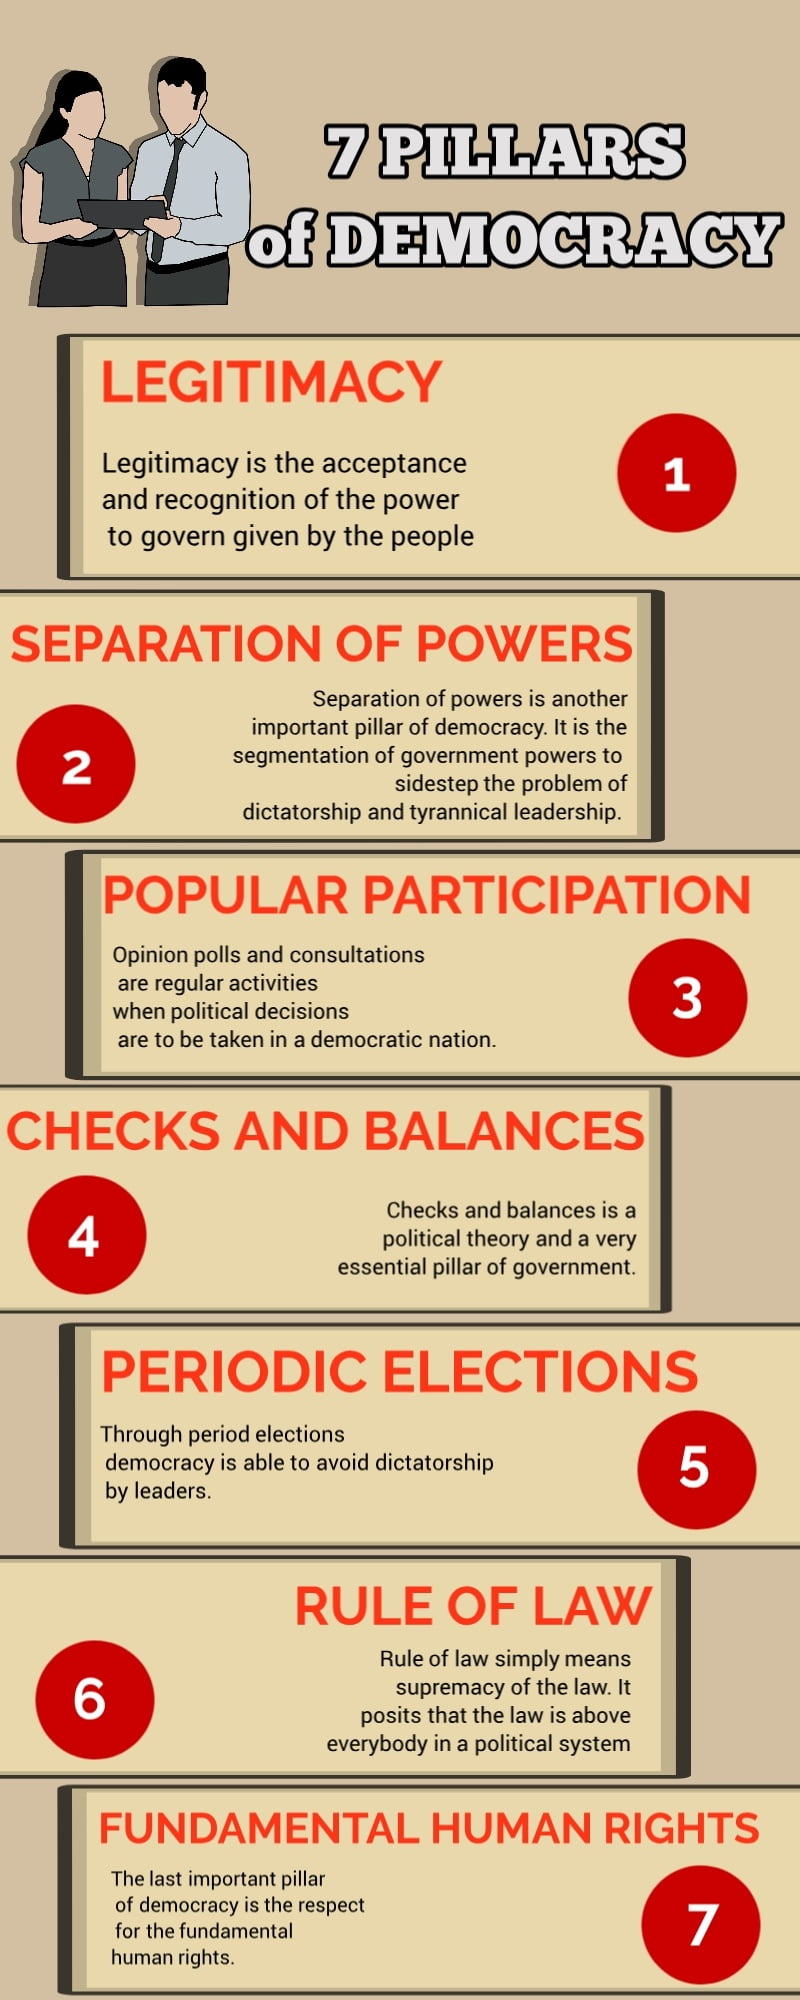 Pillars of Democracy: 7 Essential Pillars of a Democratic Government